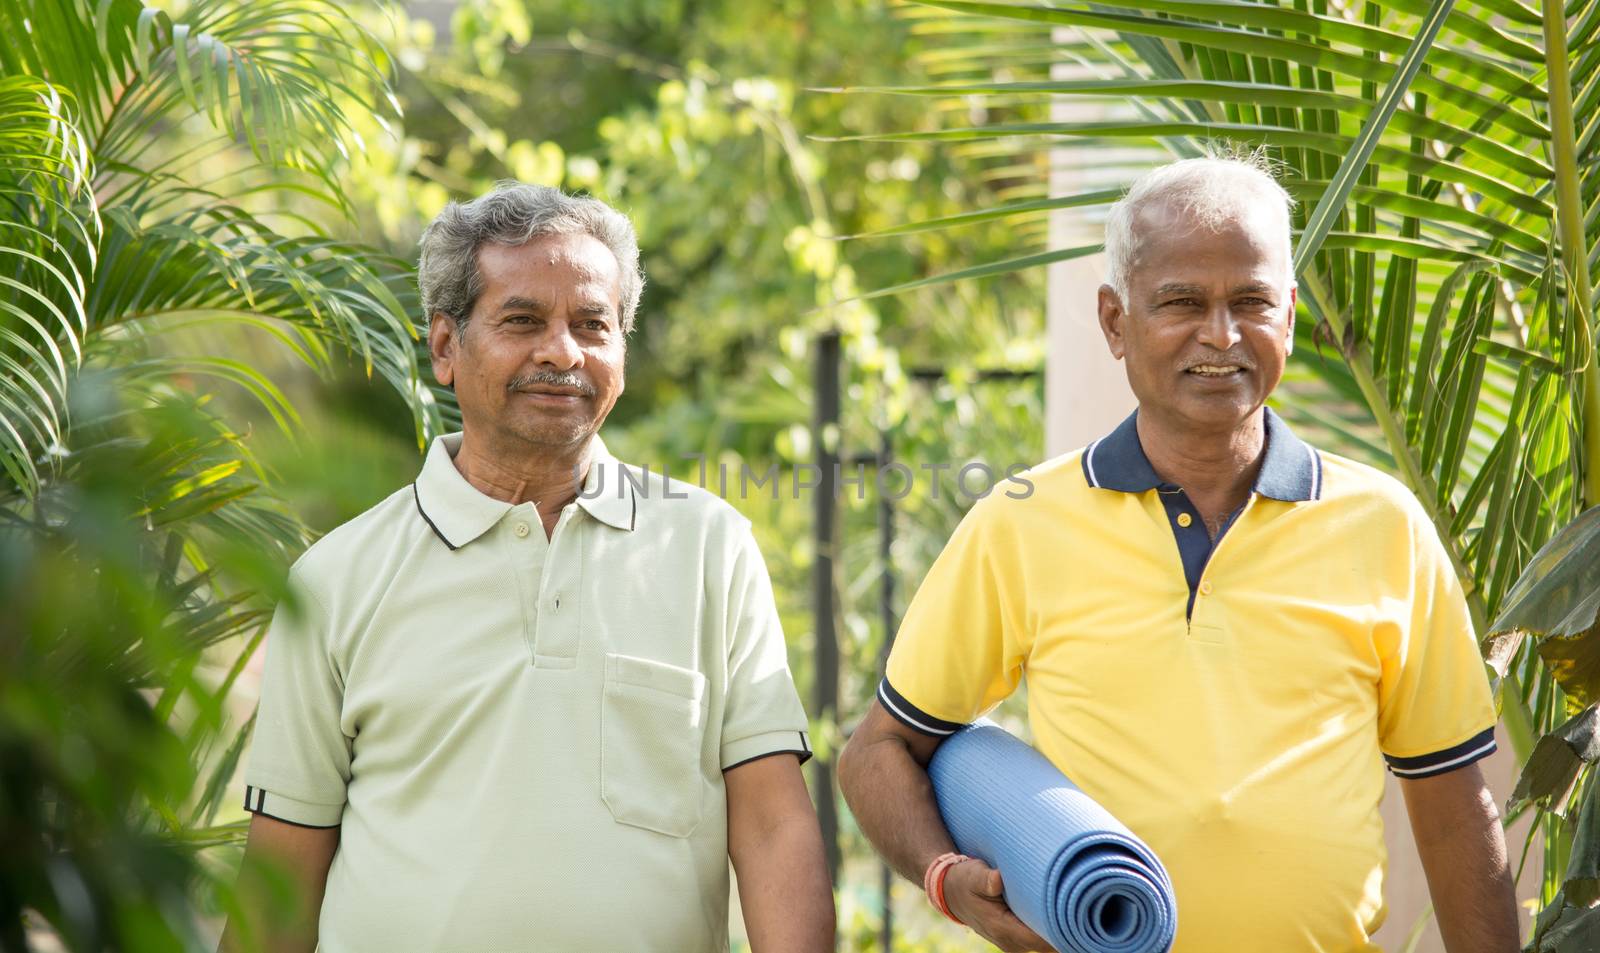 Happy Senior people with yoga mat in park - Healthy elderly men with fitness mat outdoor - older joyful friends walking in garden during morning by lakshmiprasad.maski@gmai.com